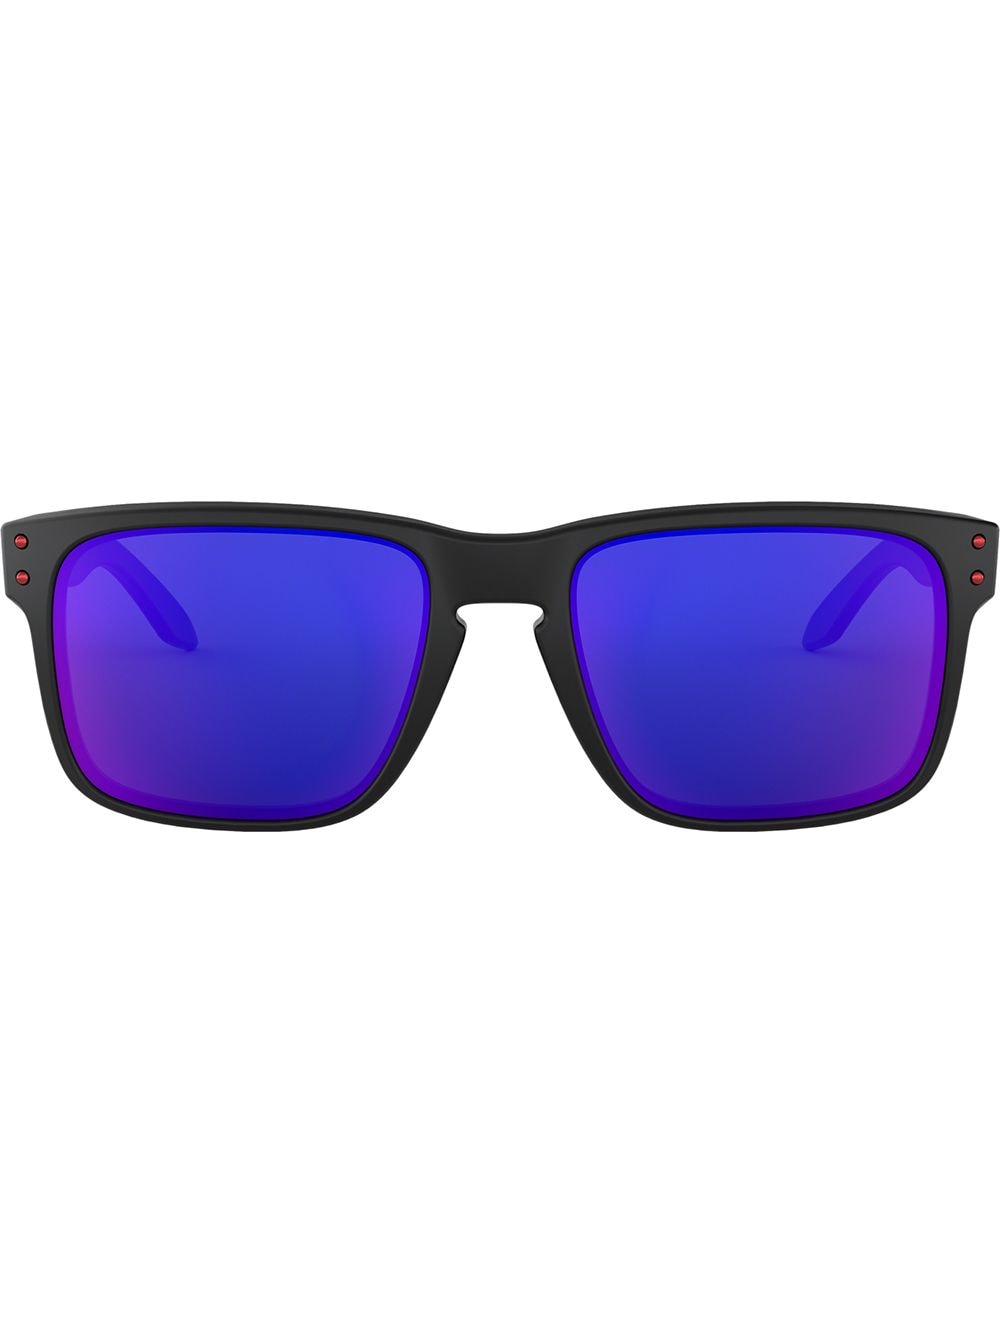 Black/blue Holbrook square sunglasses